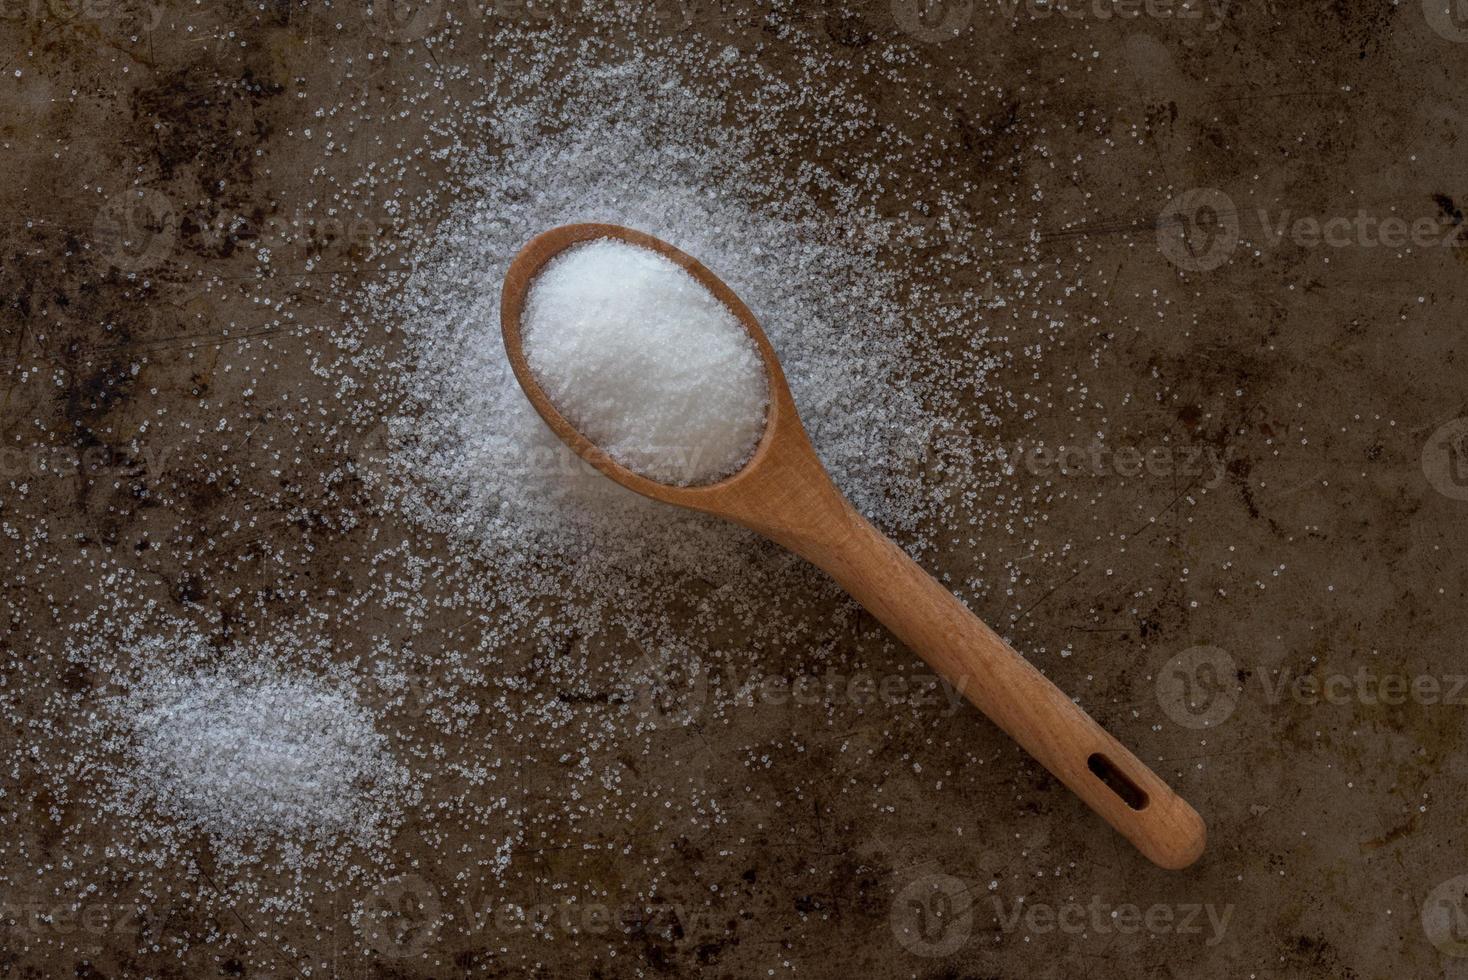 Iodized Table Salt Spilled from a Teaspoon photo